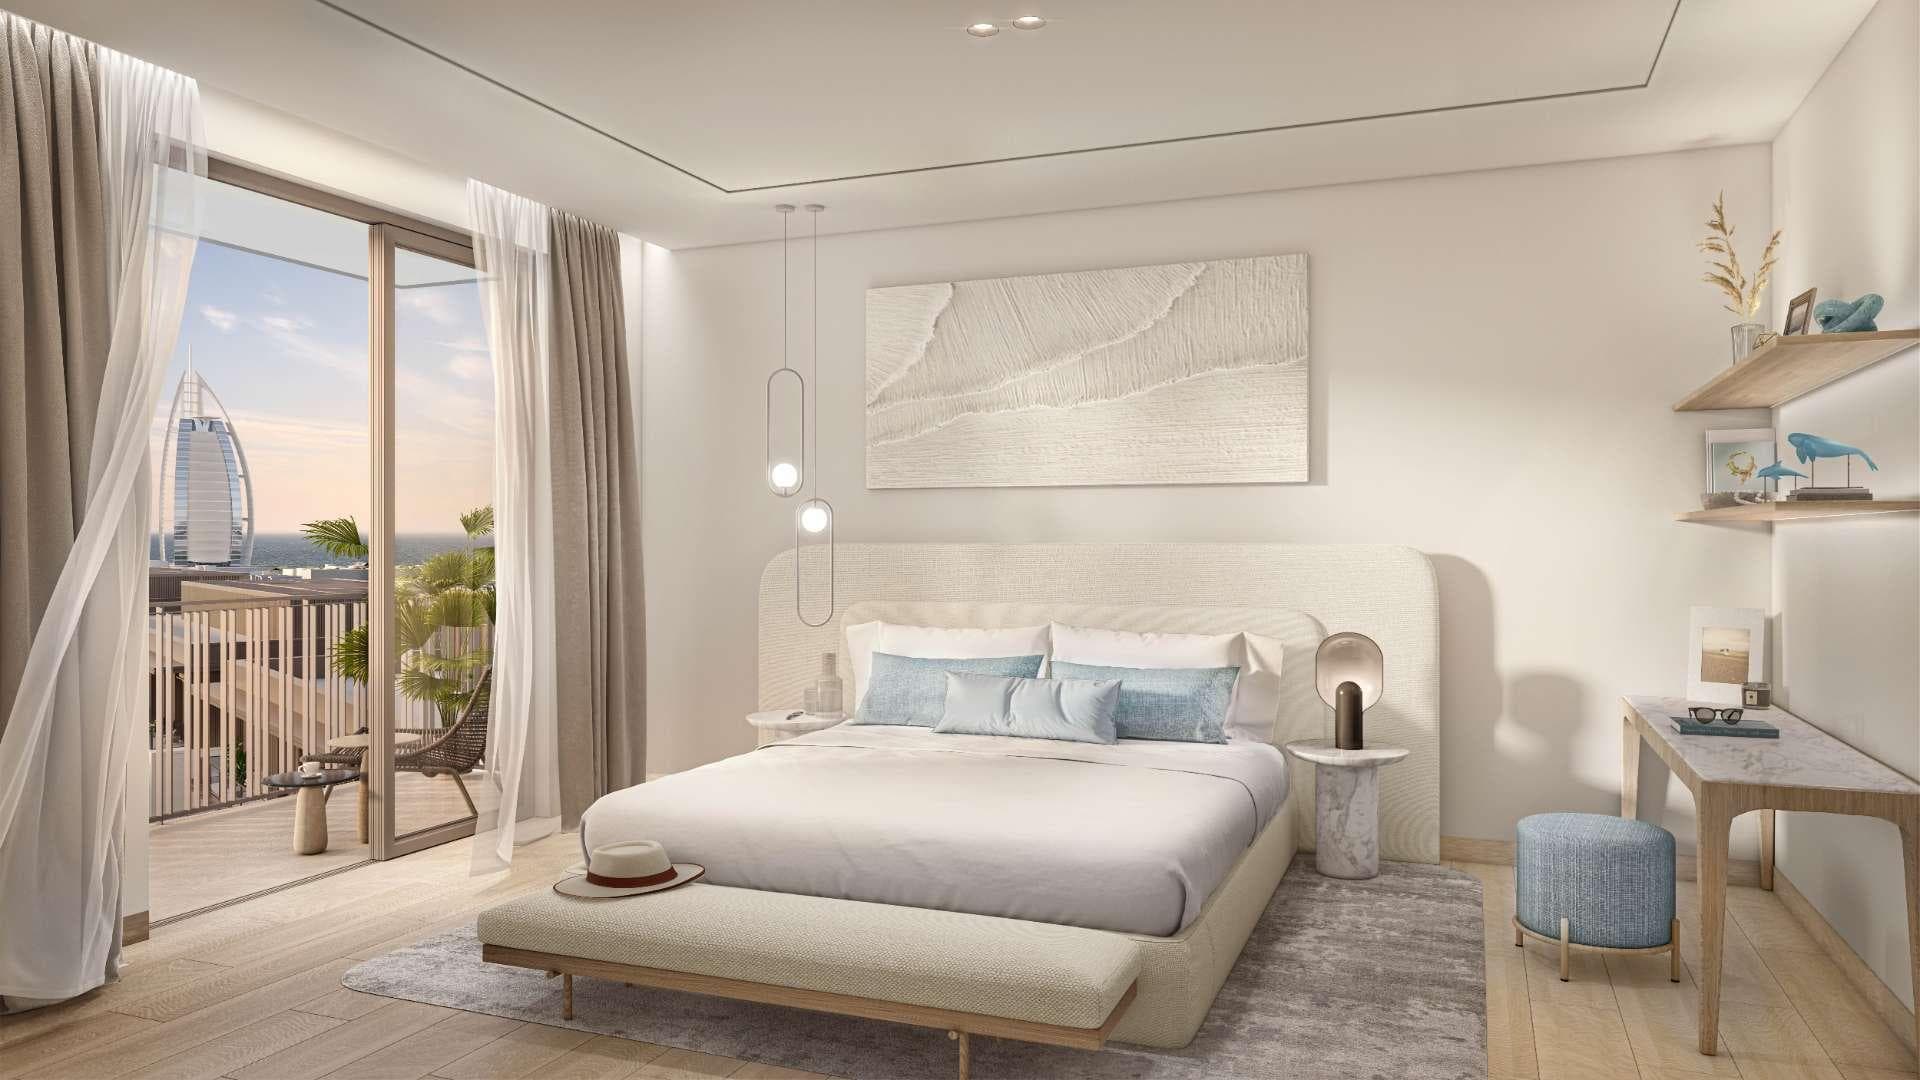 4 Bedroom Apartment For Sale Madinat Jumeirah Living Lp37122 2c80d01b30ce640.jpg